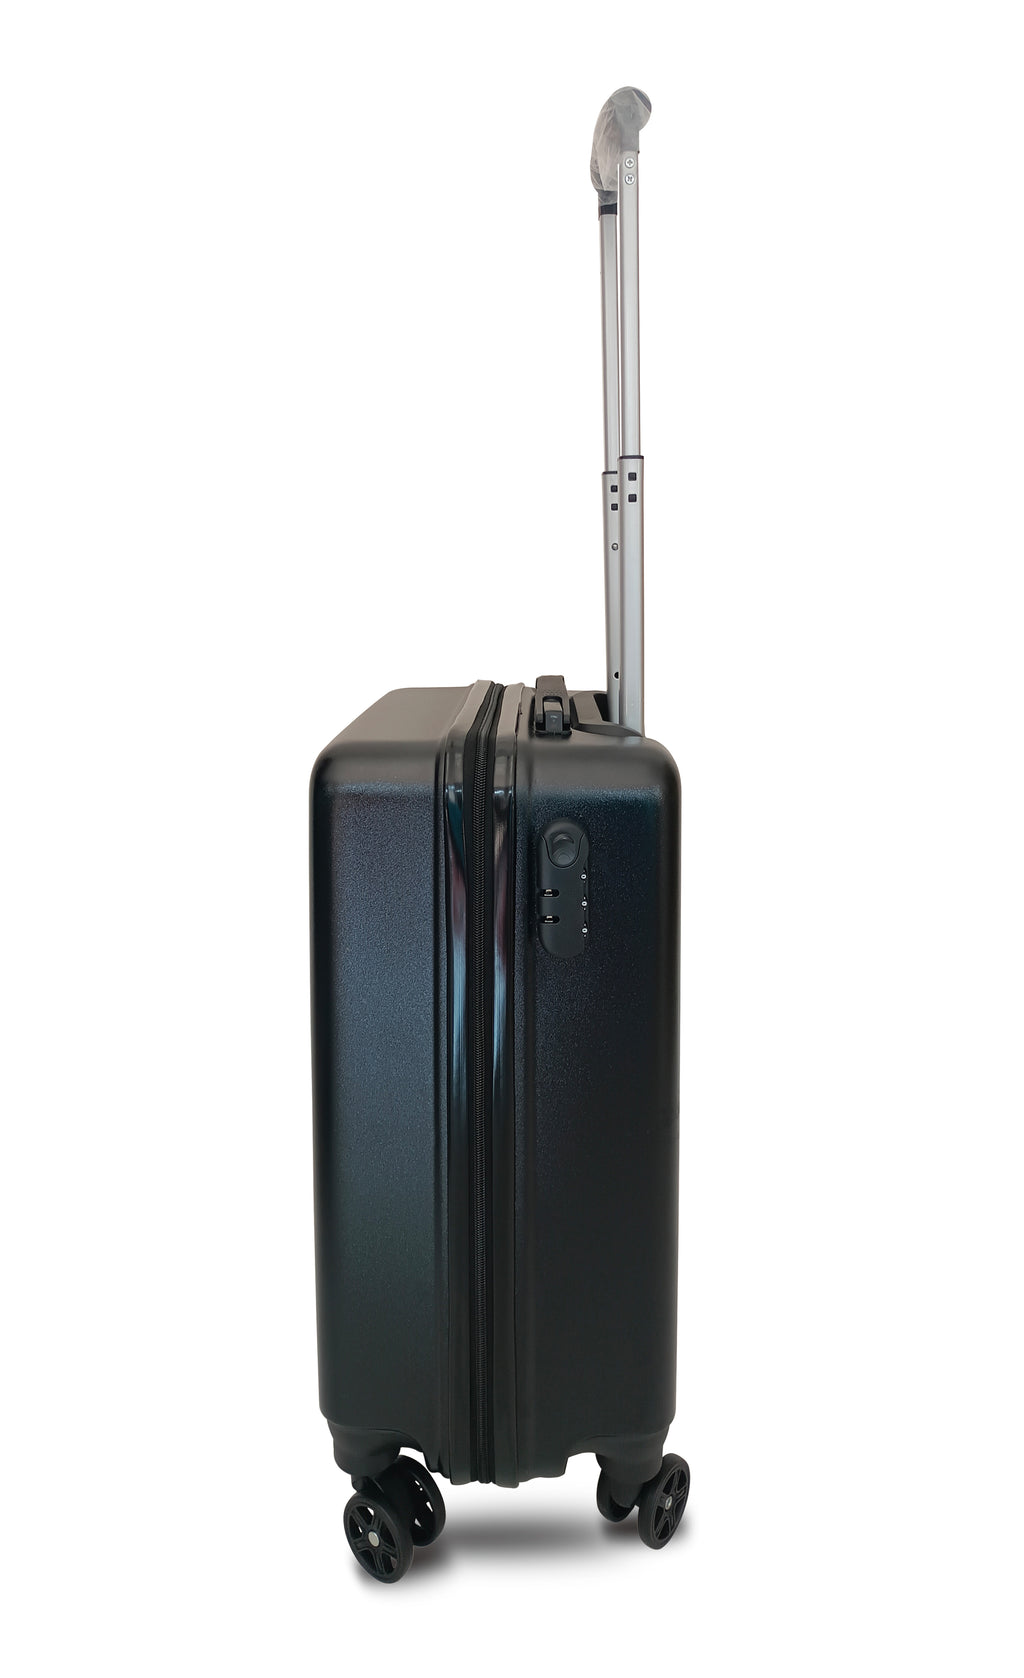 Avengers - 20in MAR095 retro onboard suitcase - Black